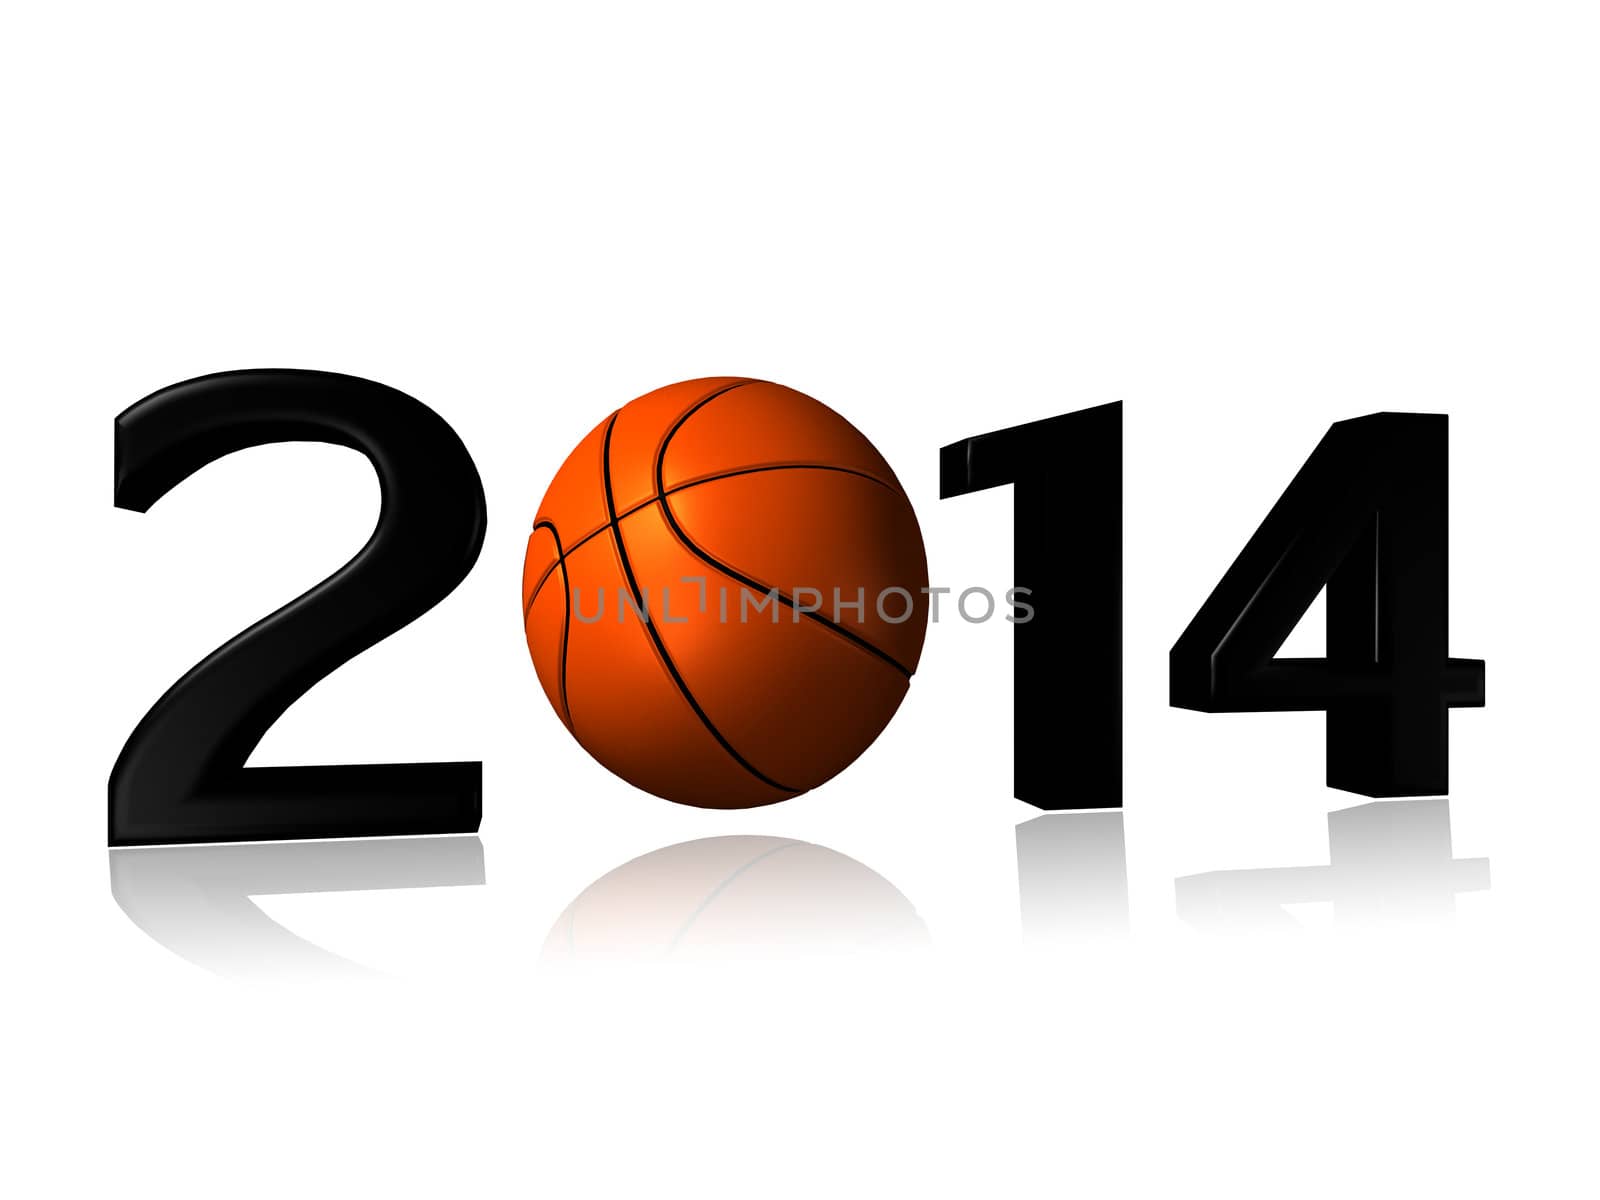 It's a big 2014 basket logo on a white background